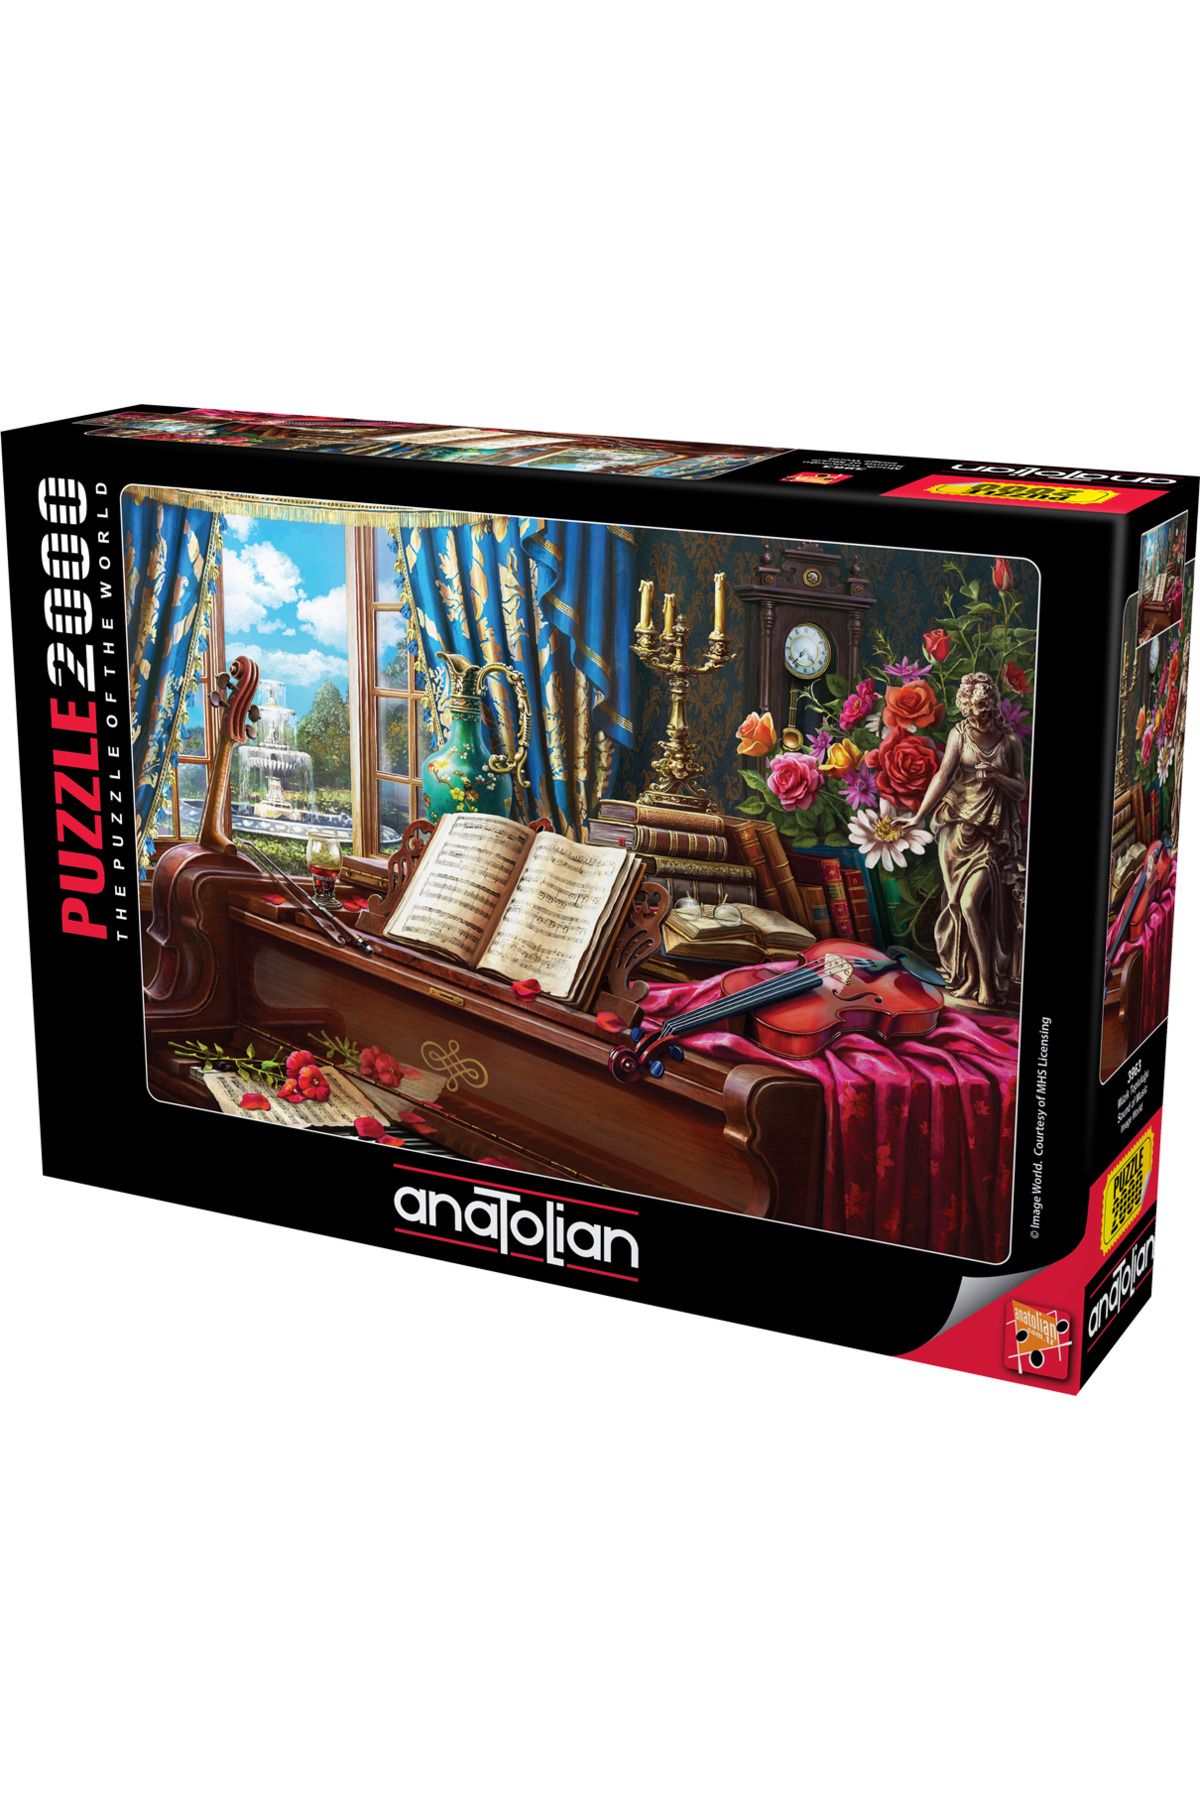 Anatolian Puzzle 2000 Parçalık Puzzle / Müzik Topluluğu - Kod:3963